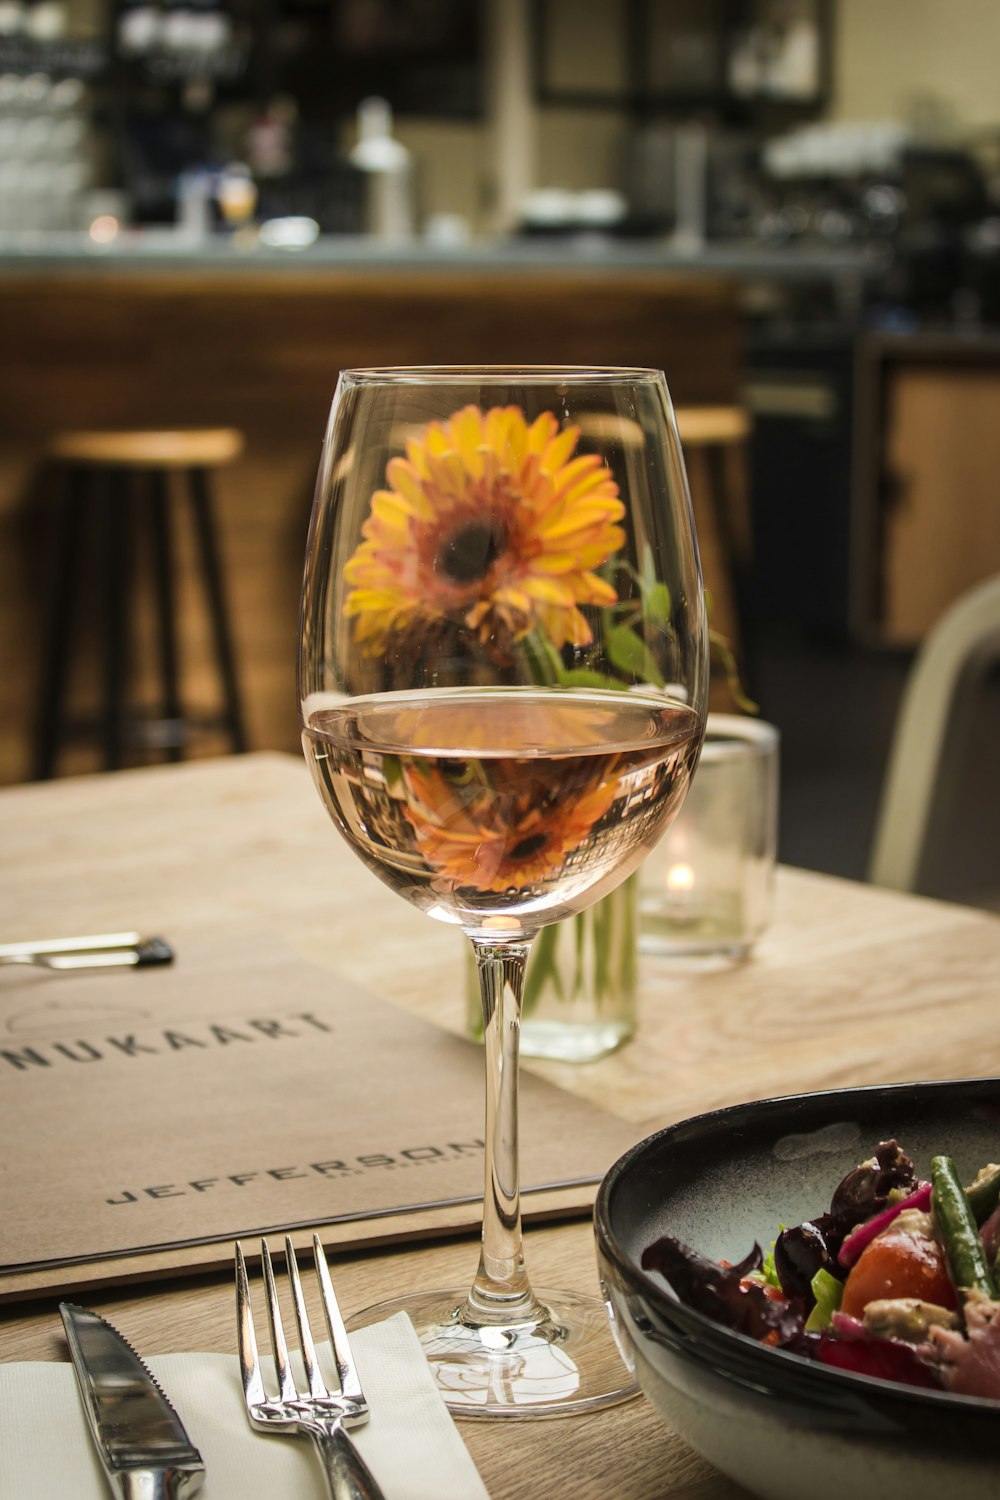 white wine on glass near gray stainless steel fork and knife beside orange gerbera daisy flower on table